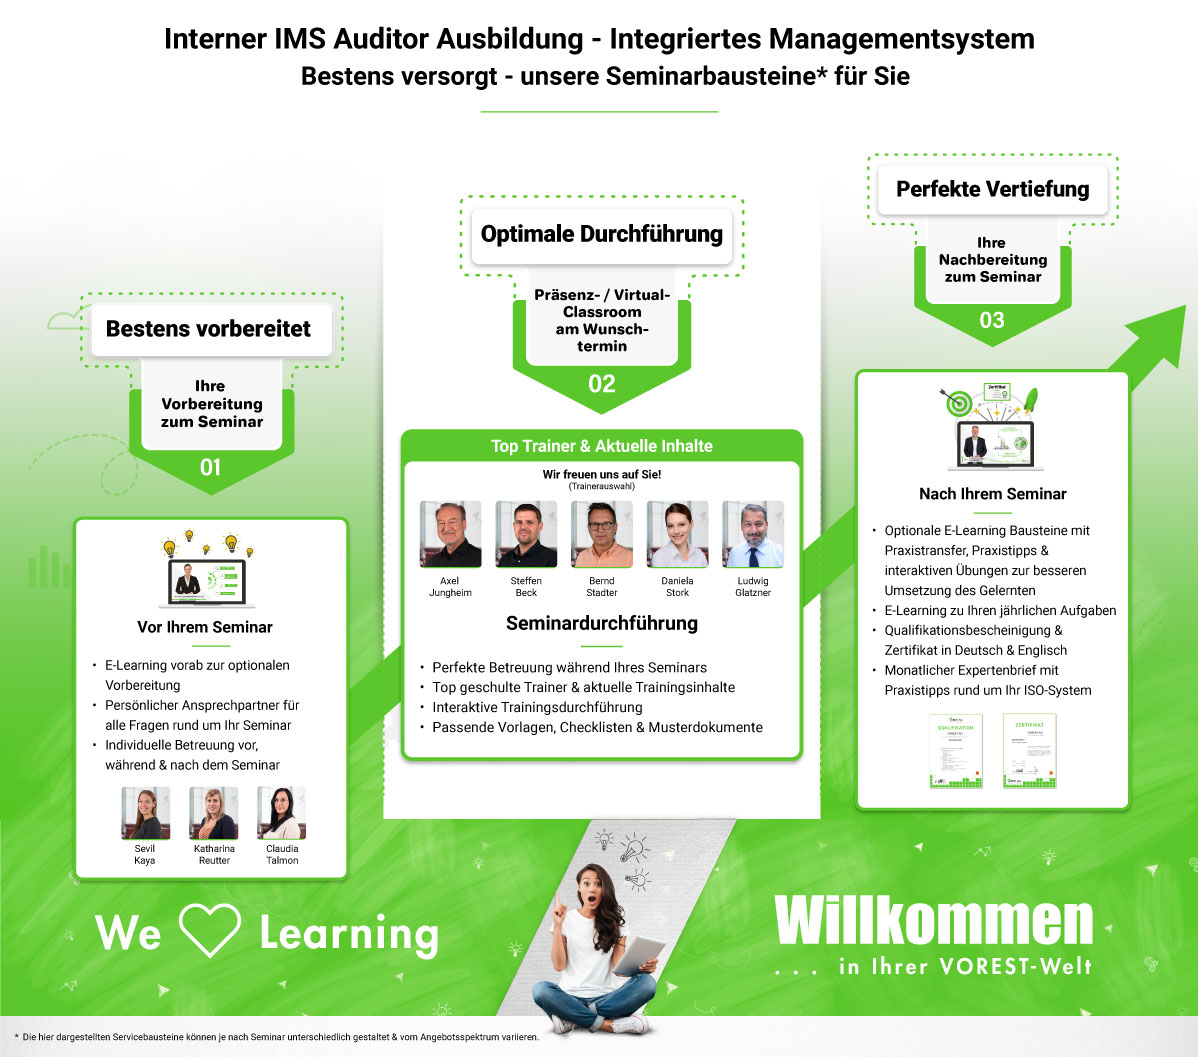 Interner IMS Auditor Ausbildung - Integriertes Managementsystem